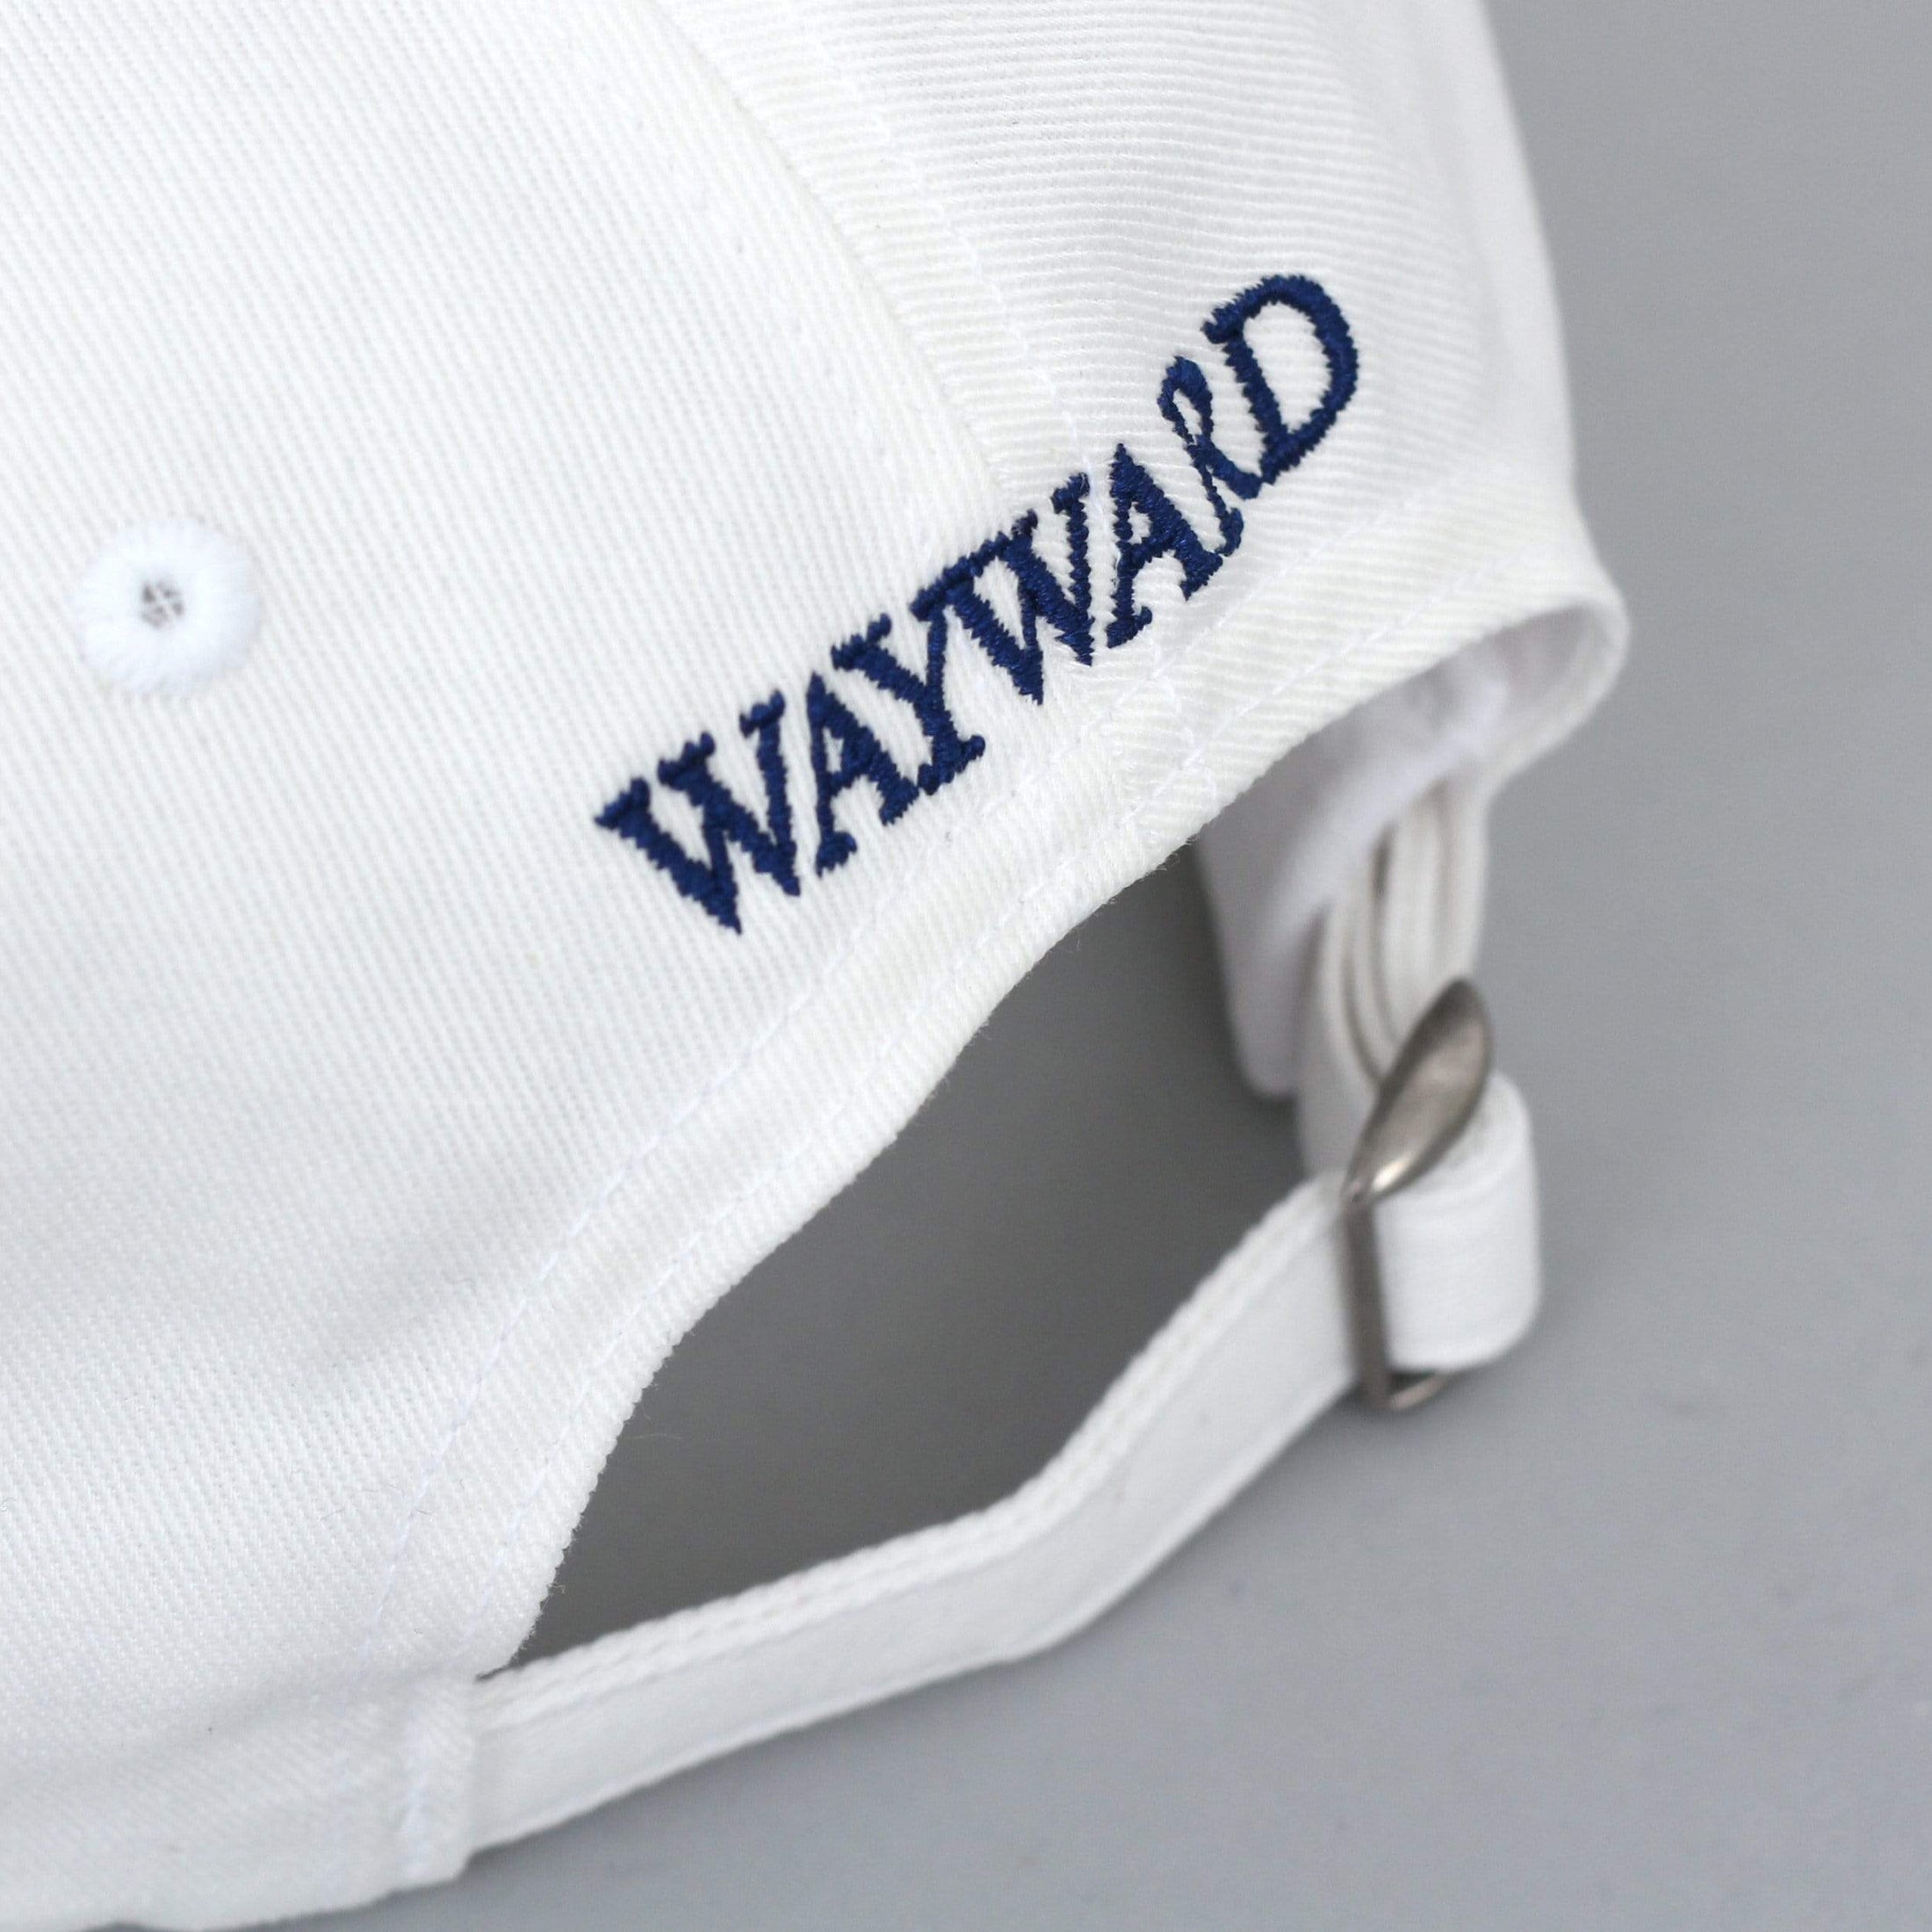 Wayward Walphy Cap White